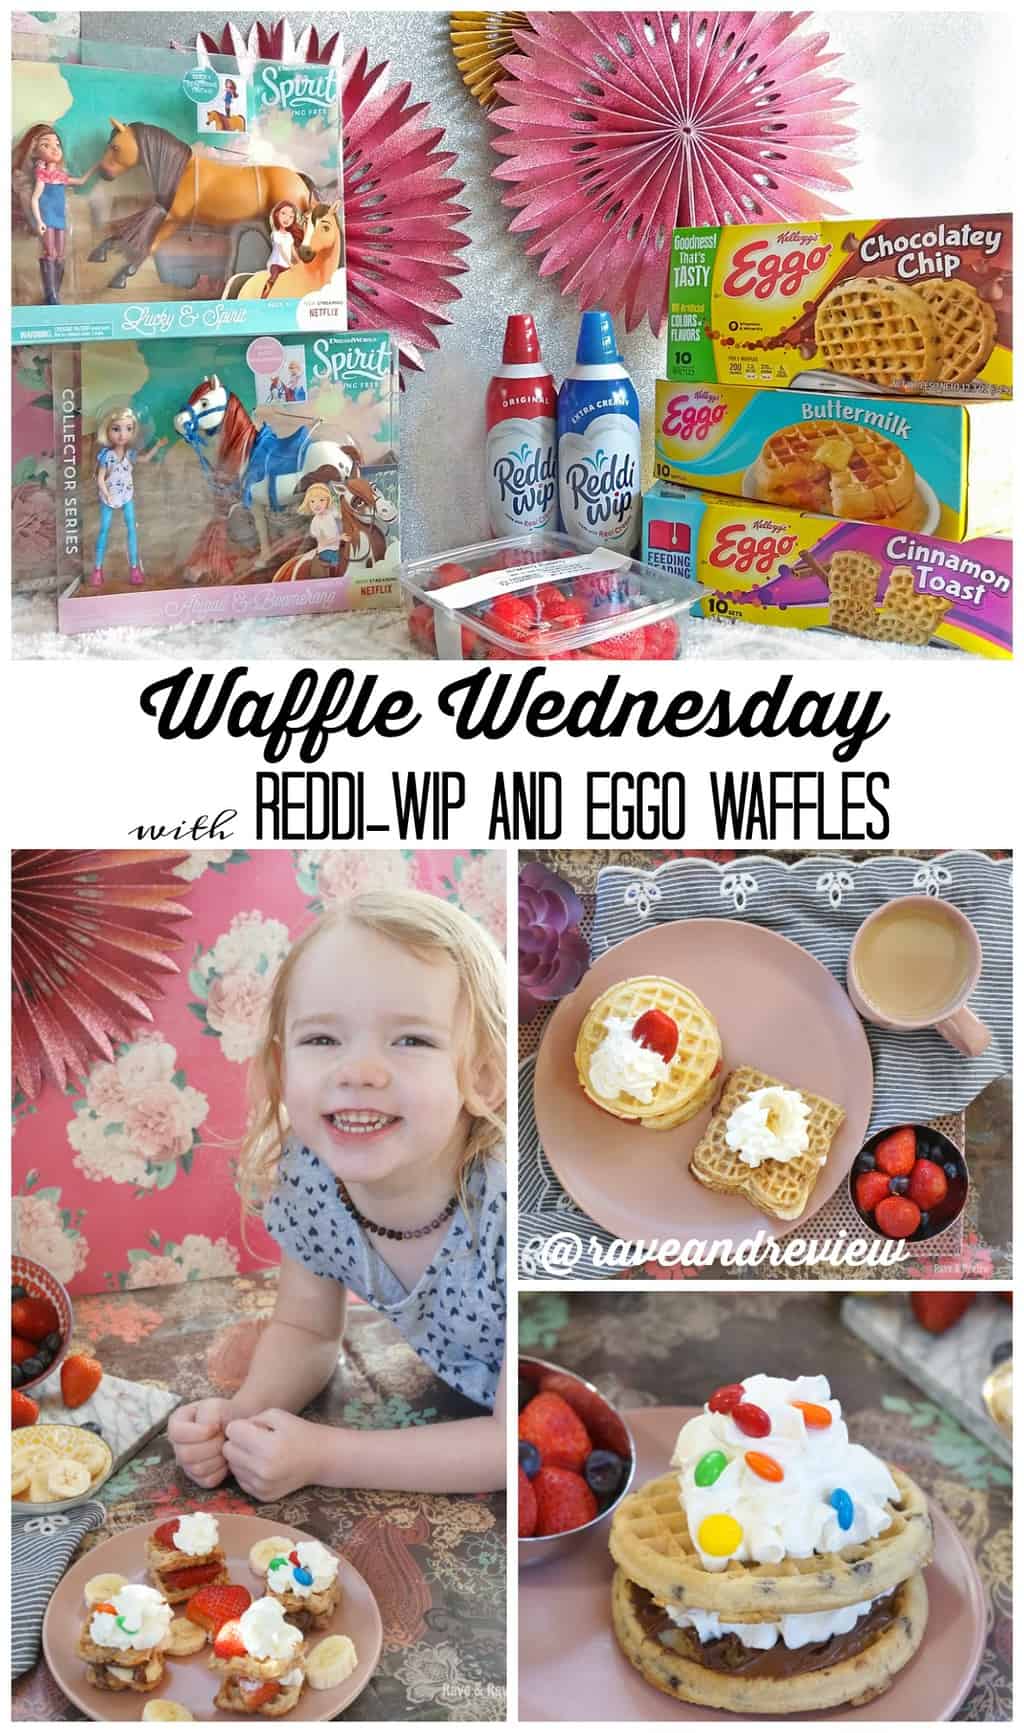 Waffle Wednesday DIY waffle bar